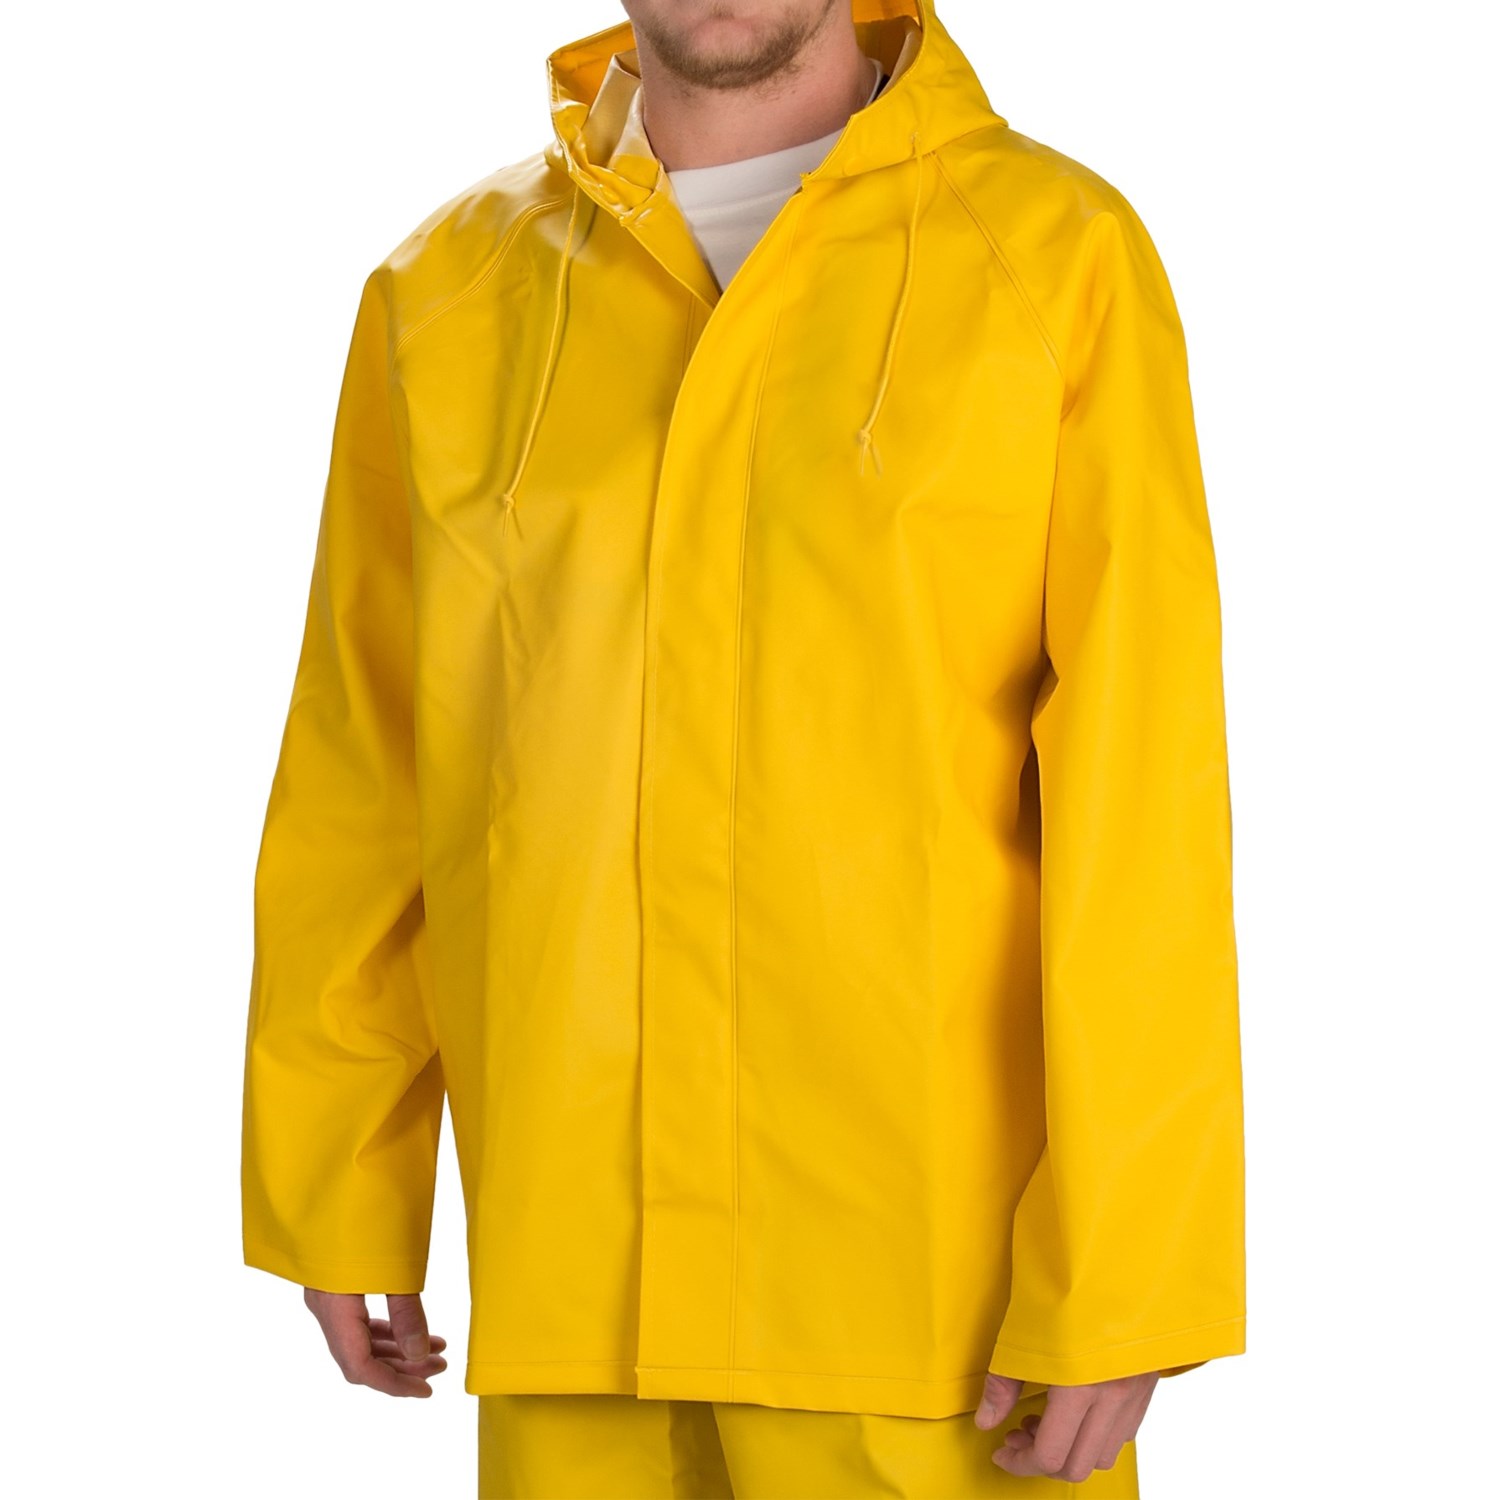 Hooded Rain Jacket (For Men) - Save 76%